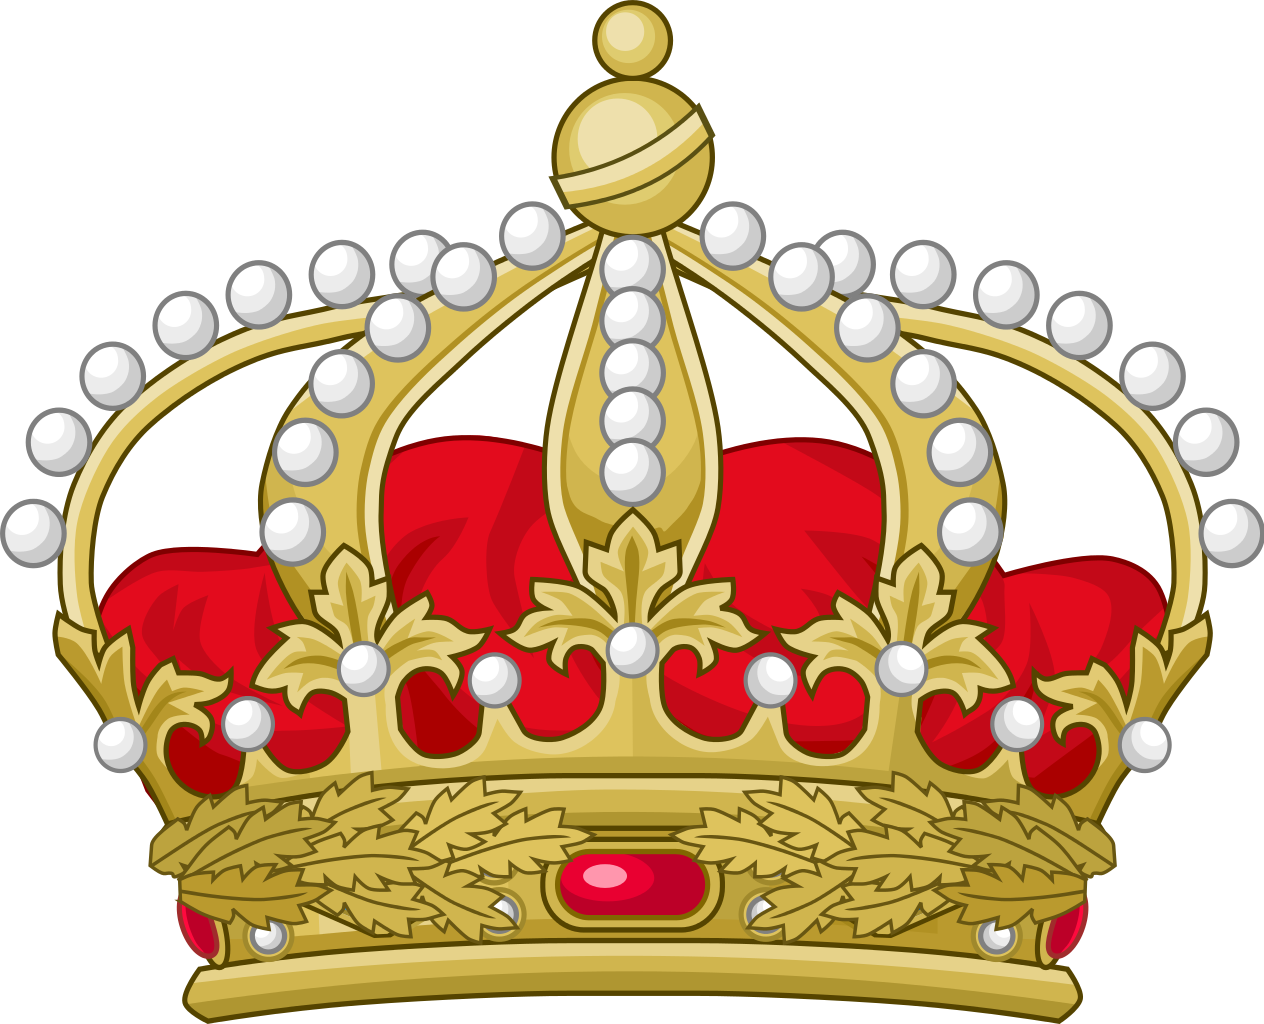 The British Royal Crown